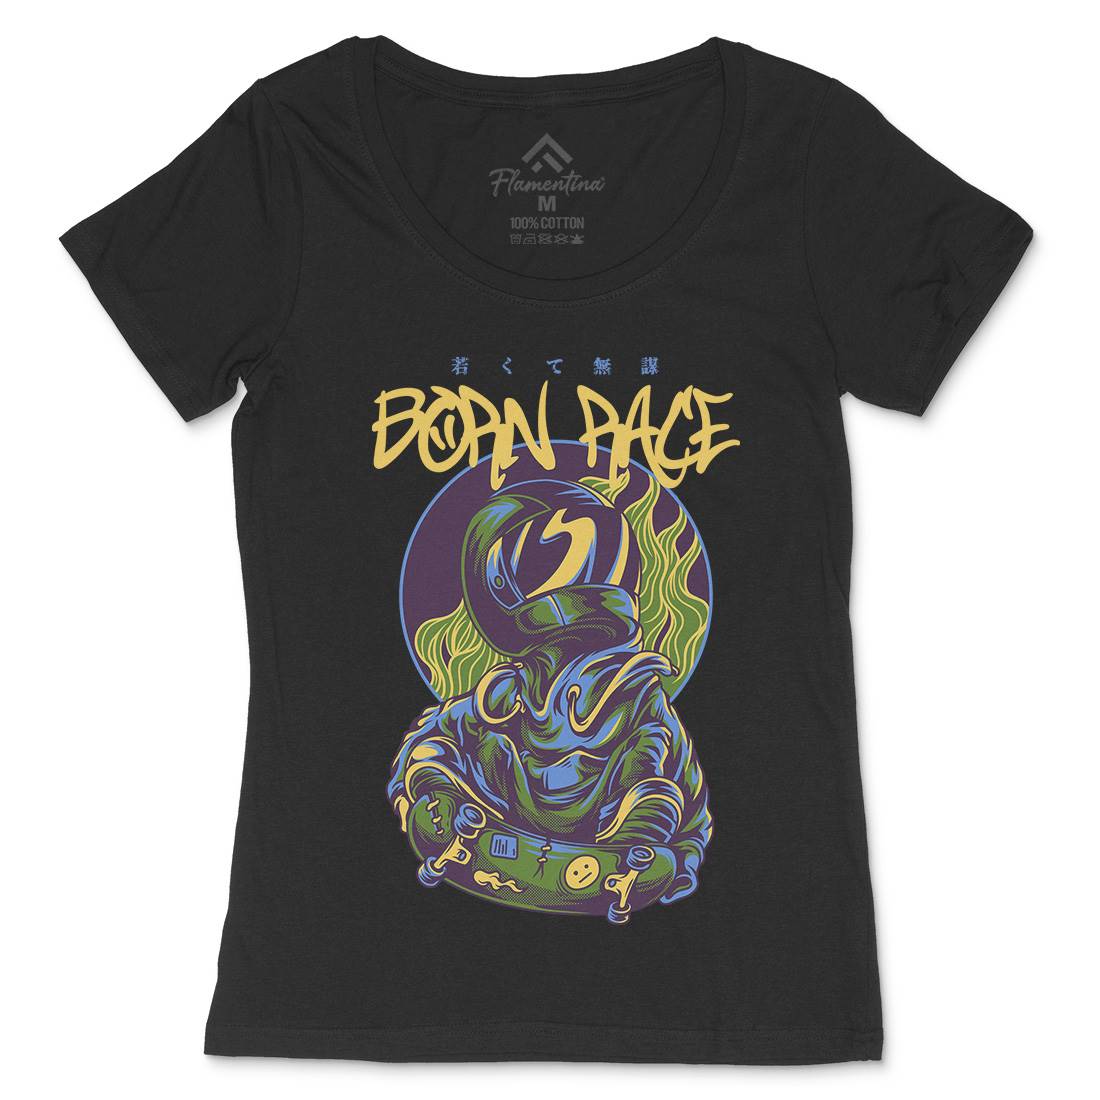 Born Race Womens Scoop Neck T-Shirt Skate D718